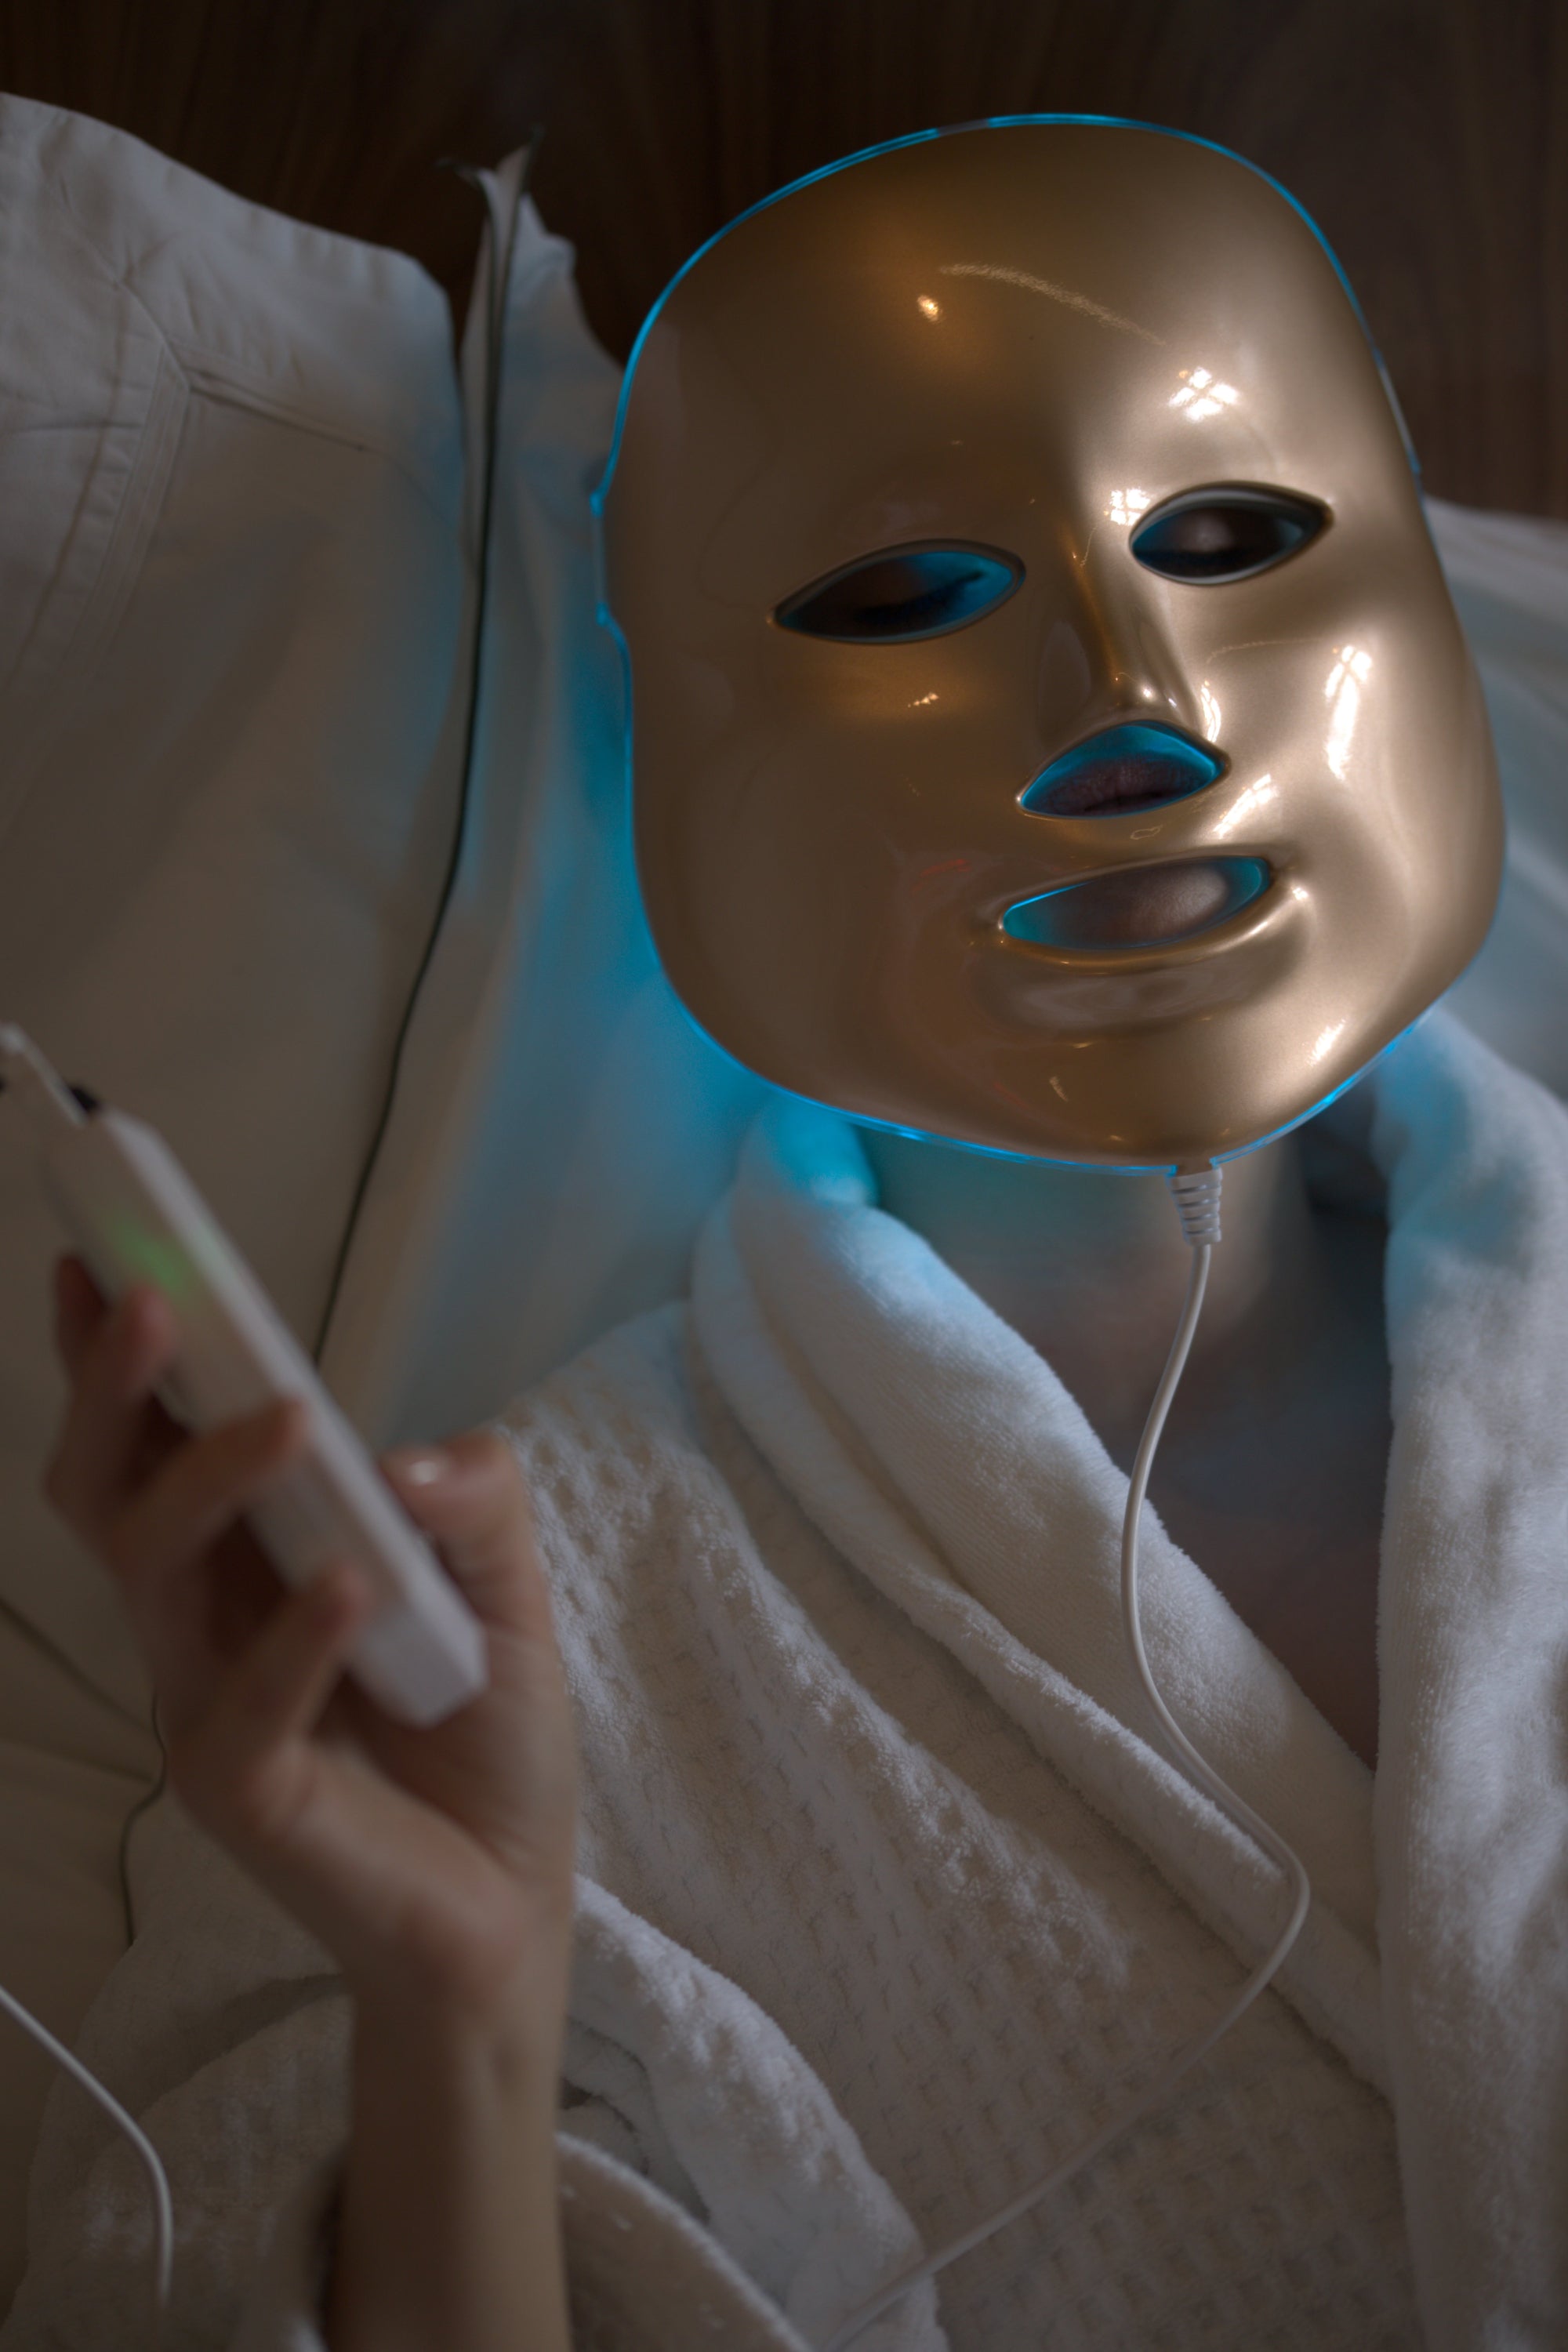 FaradBeauty LuxeGlow - Masque de luminothérapie